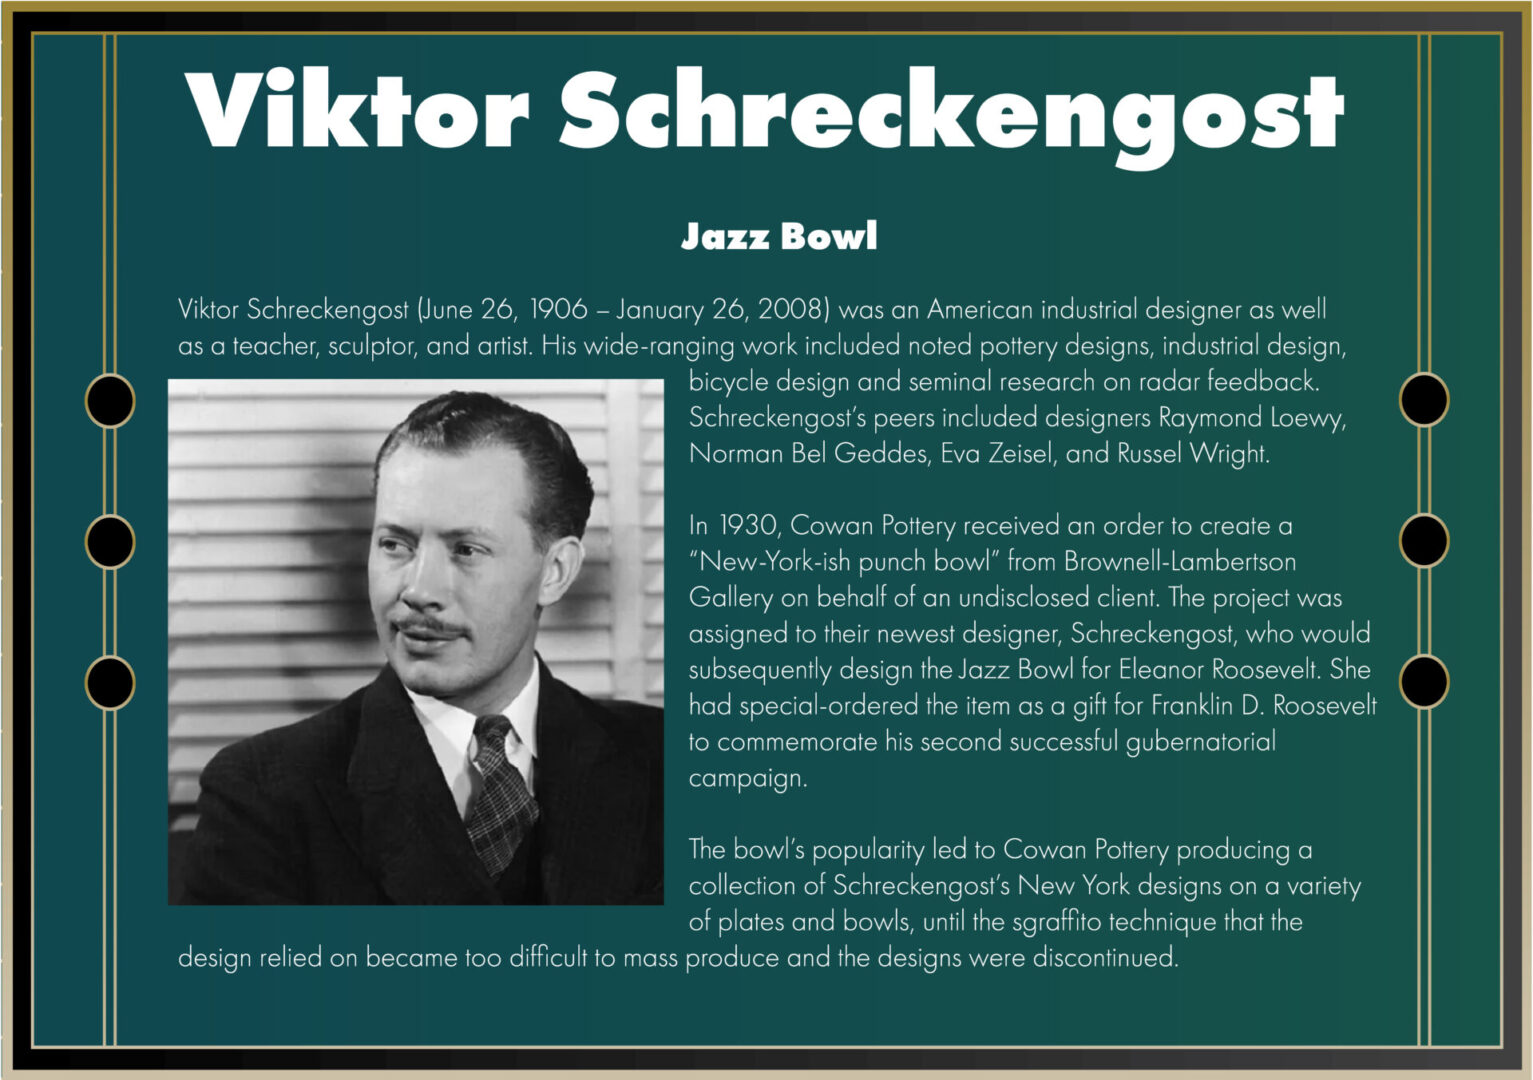 The biography of designer Victor Schreckengost